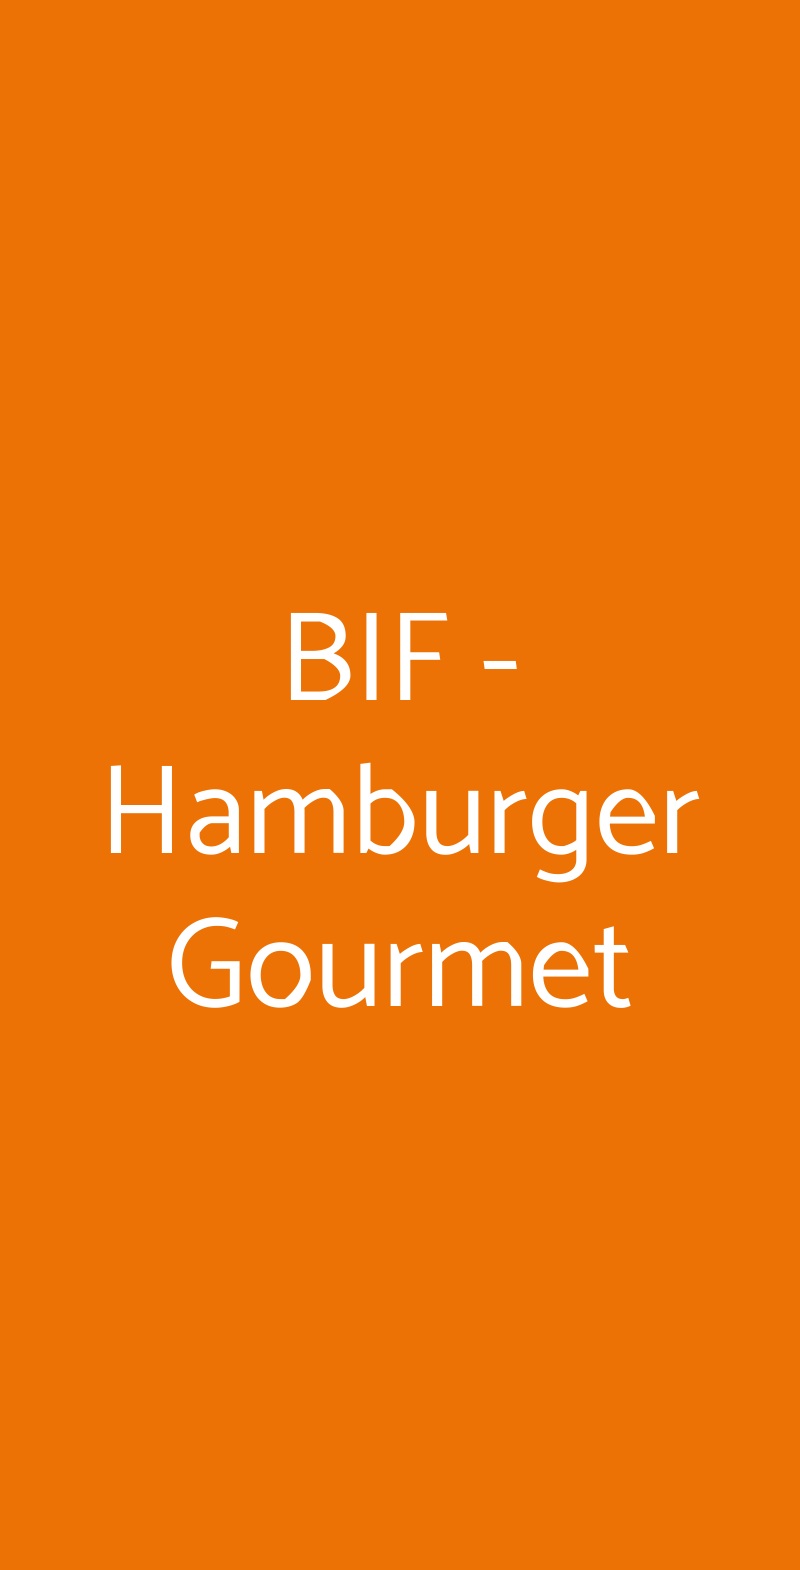 BIF - Hamburger Gourmet Catania menù 1 pagina